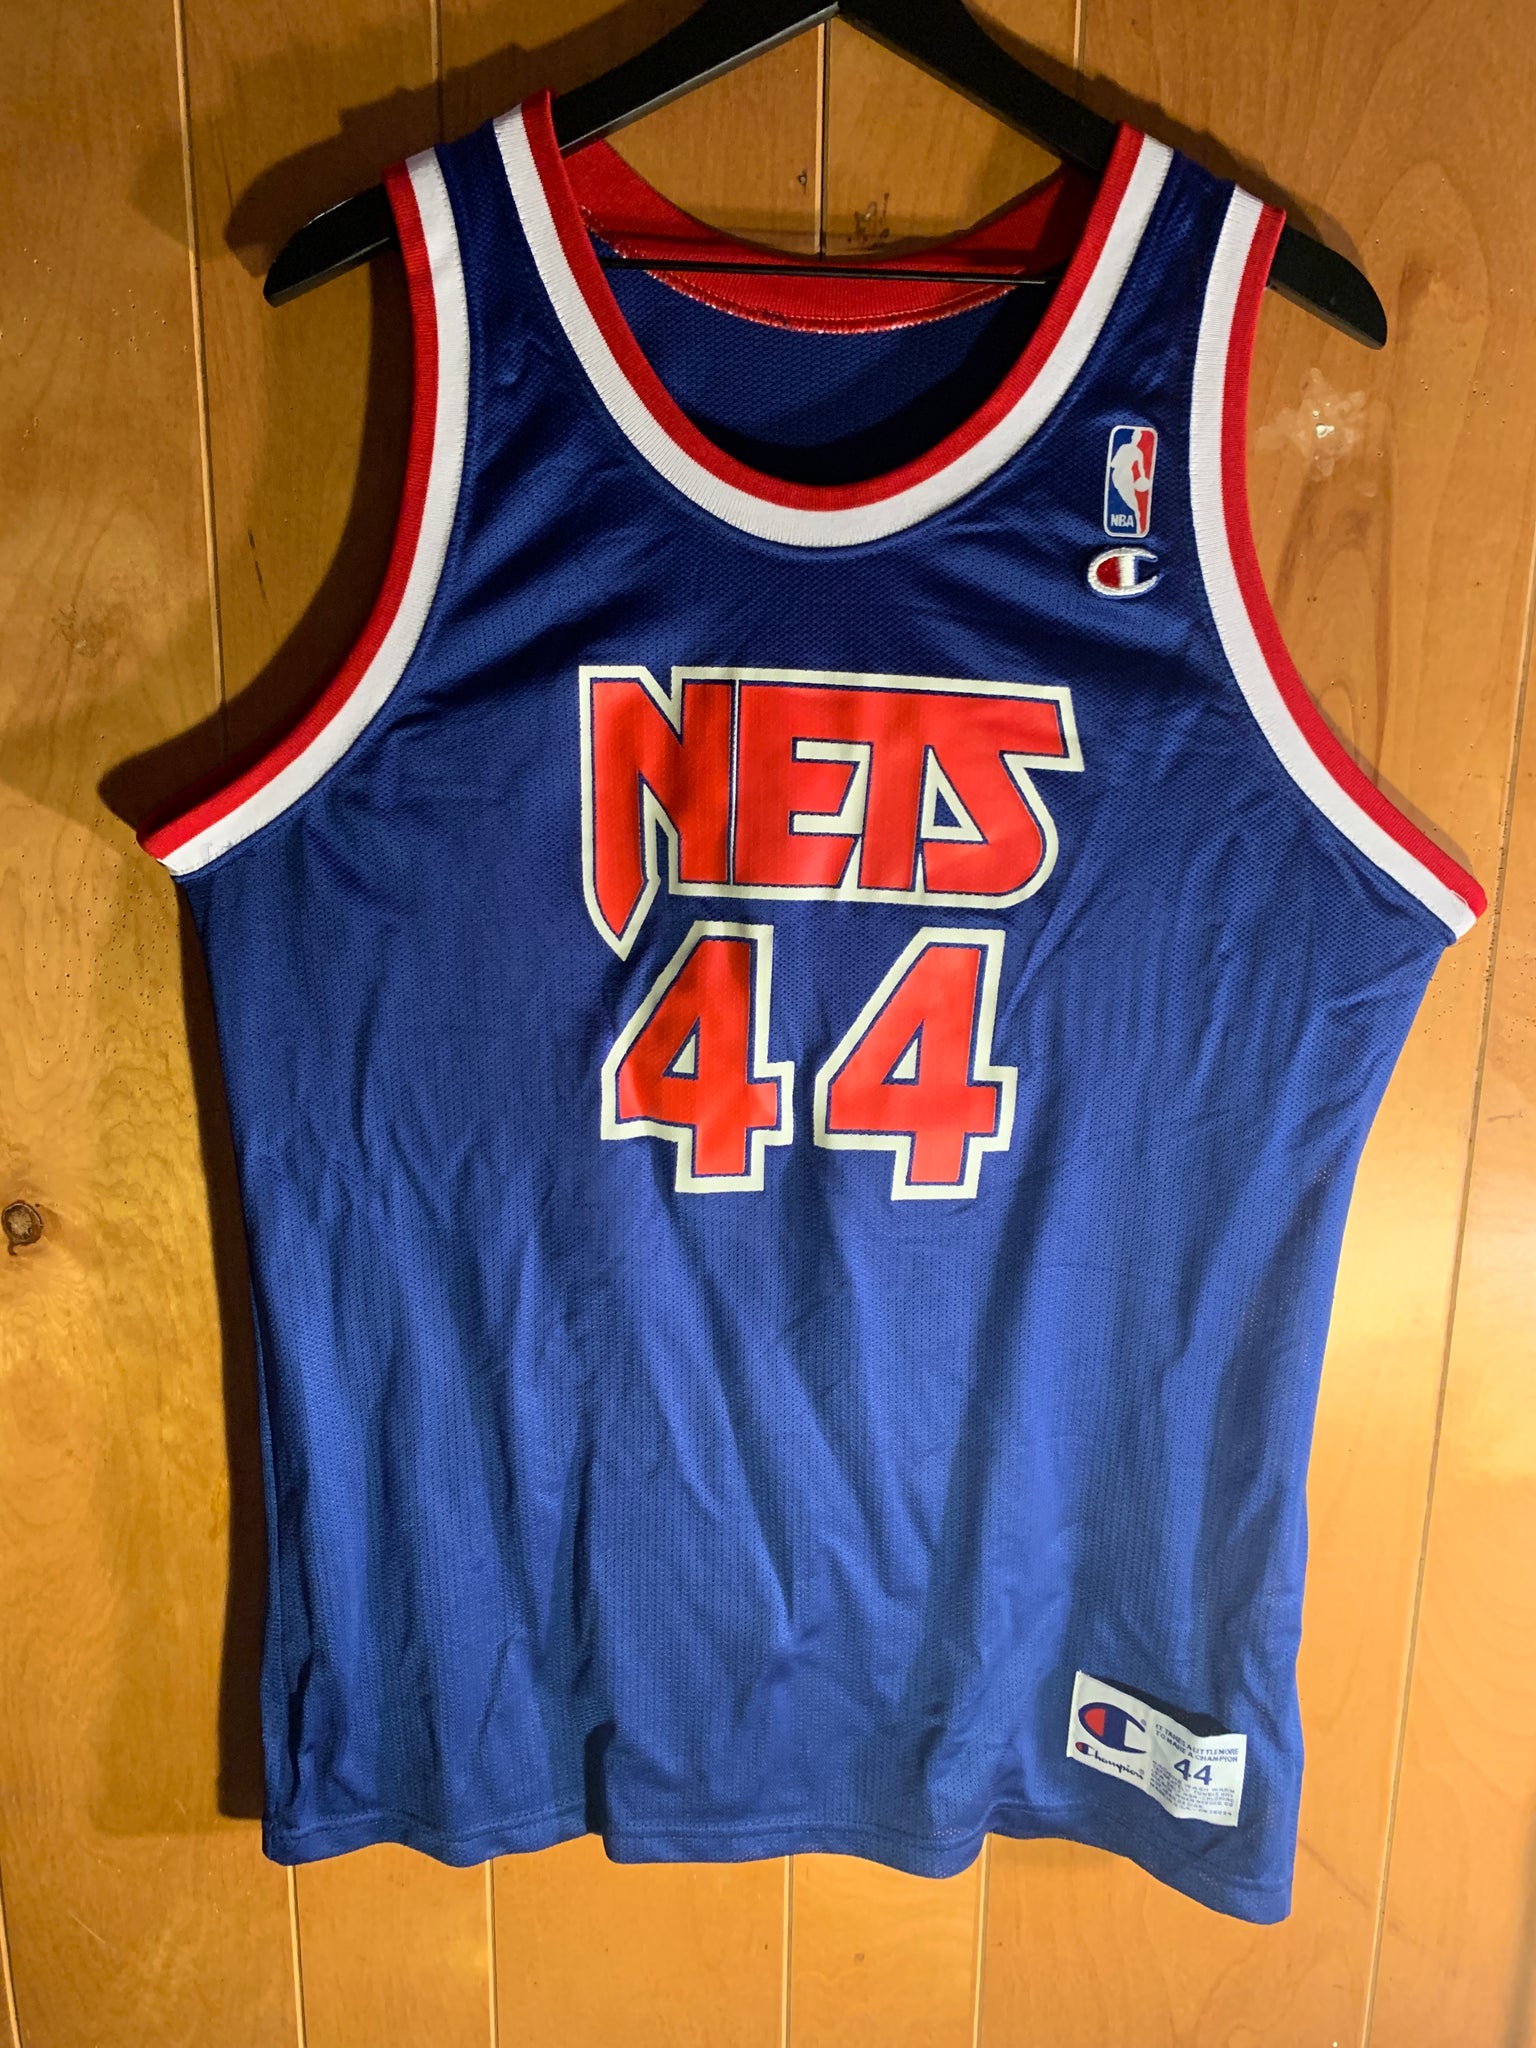 New Jersey Nets 44 Size NBA Jerseys for sale